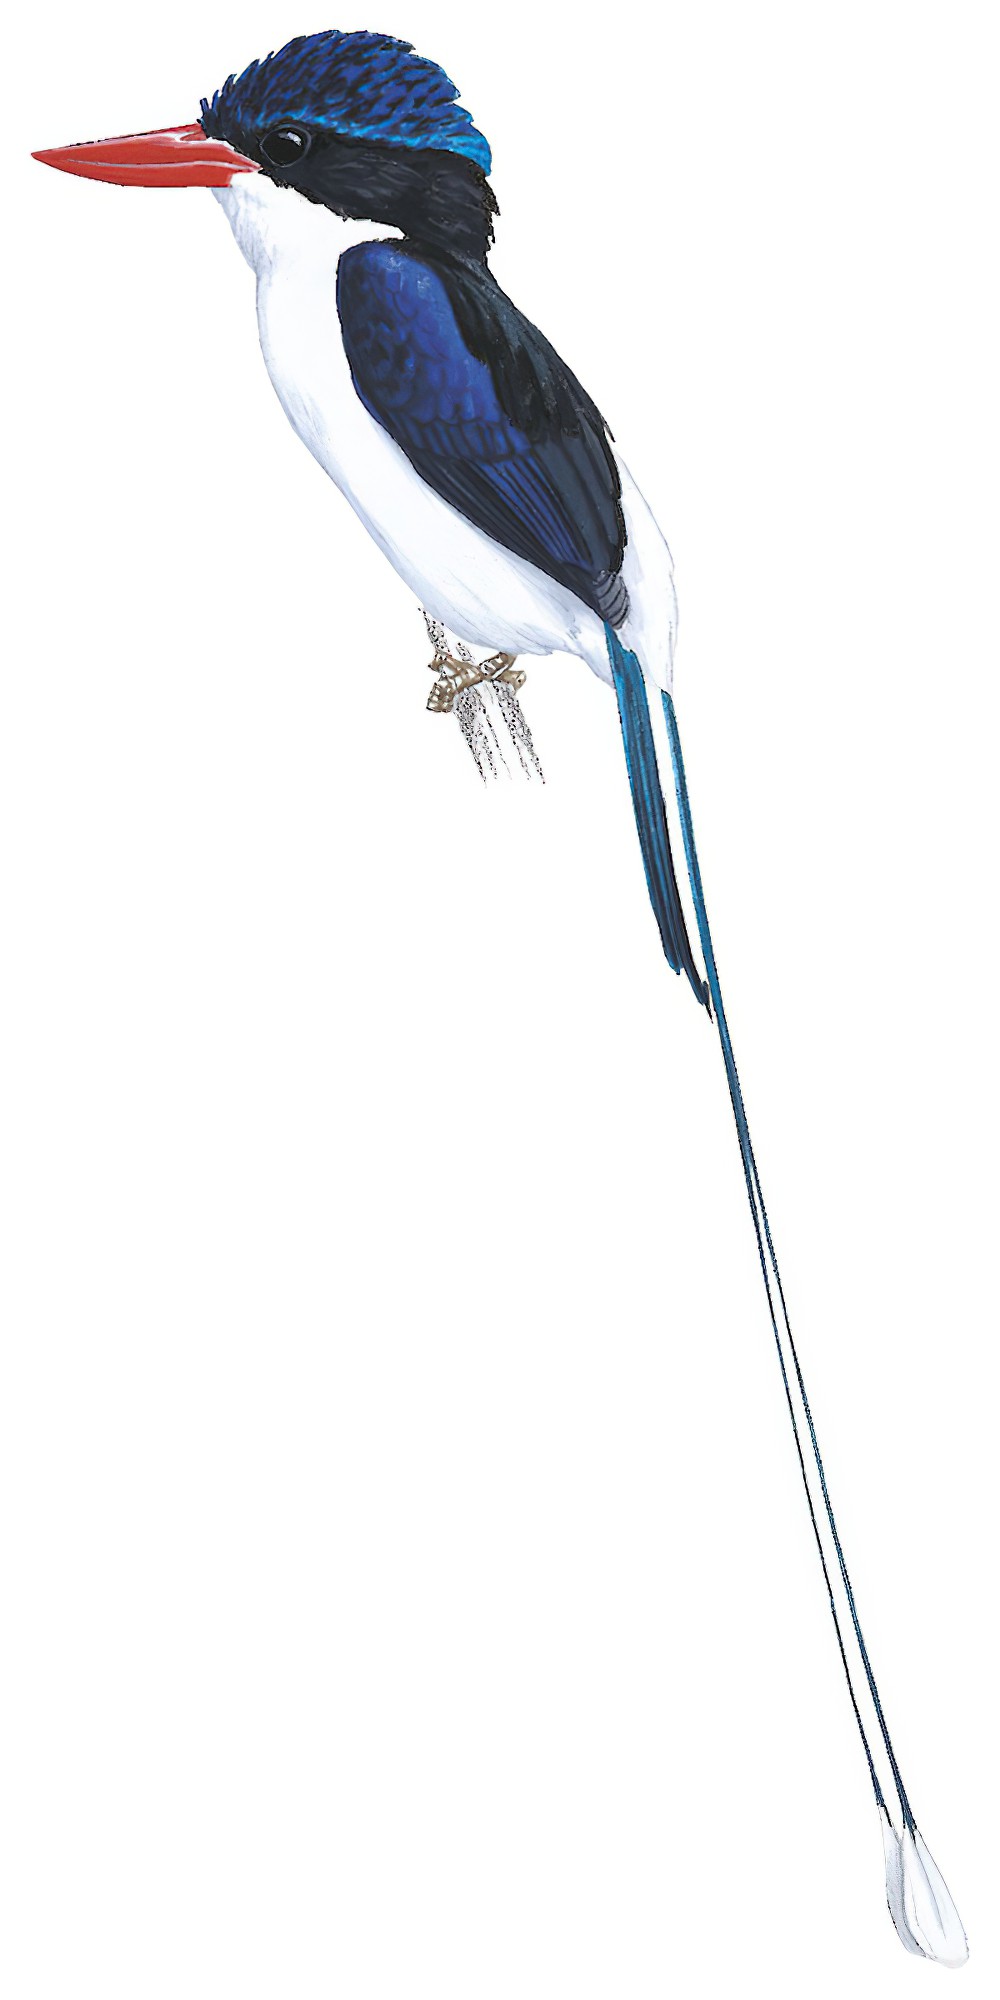 Little Paradise-Kingfisher / Tanysiptera hydrocharis